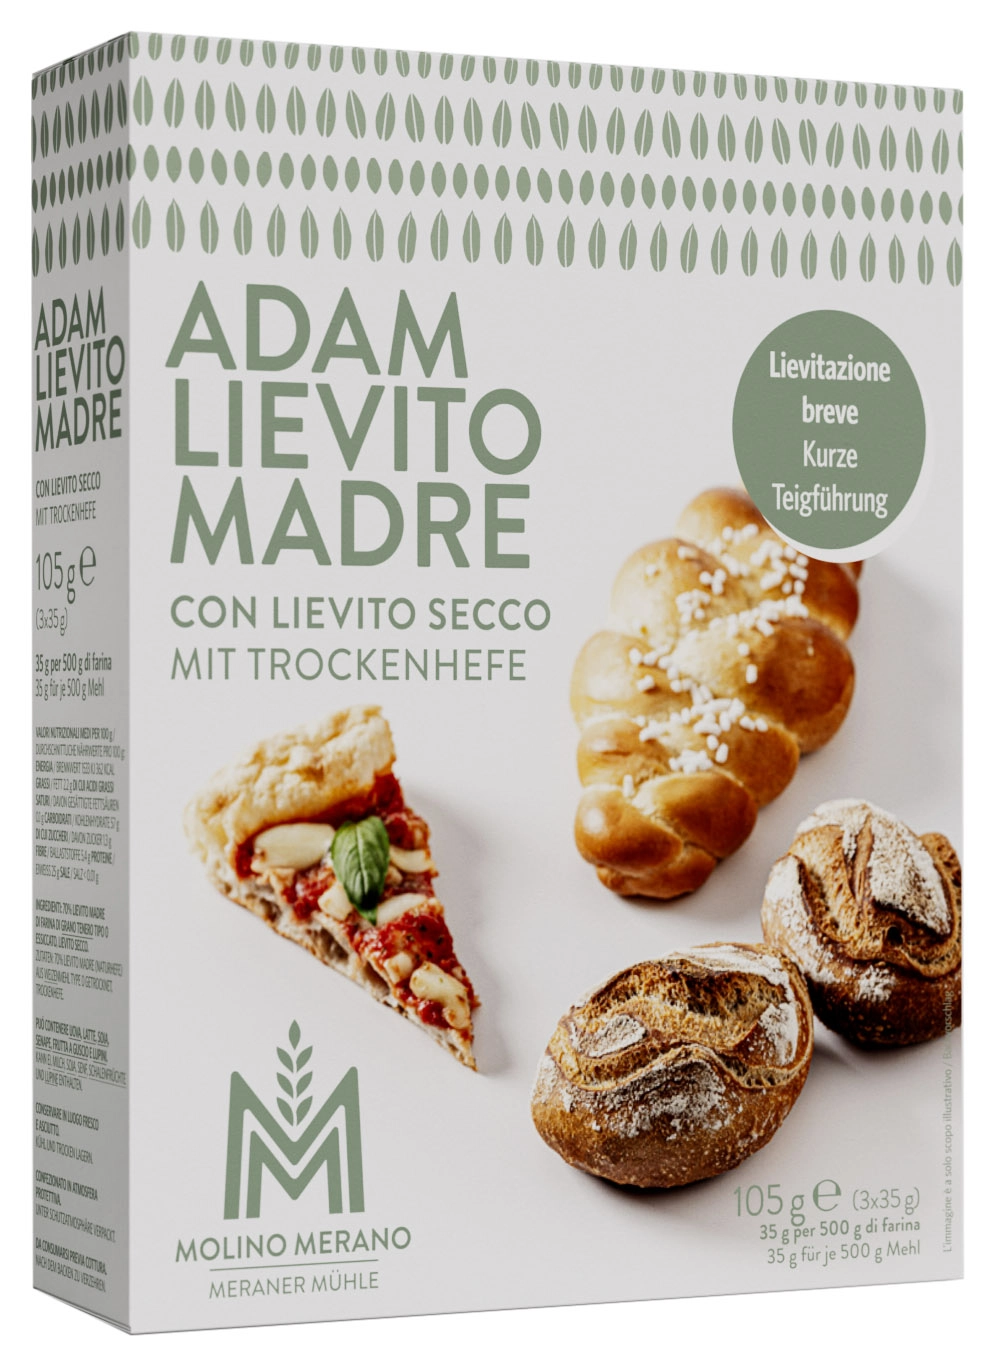 ADAM - lievito madre natural yeast with dry yeast